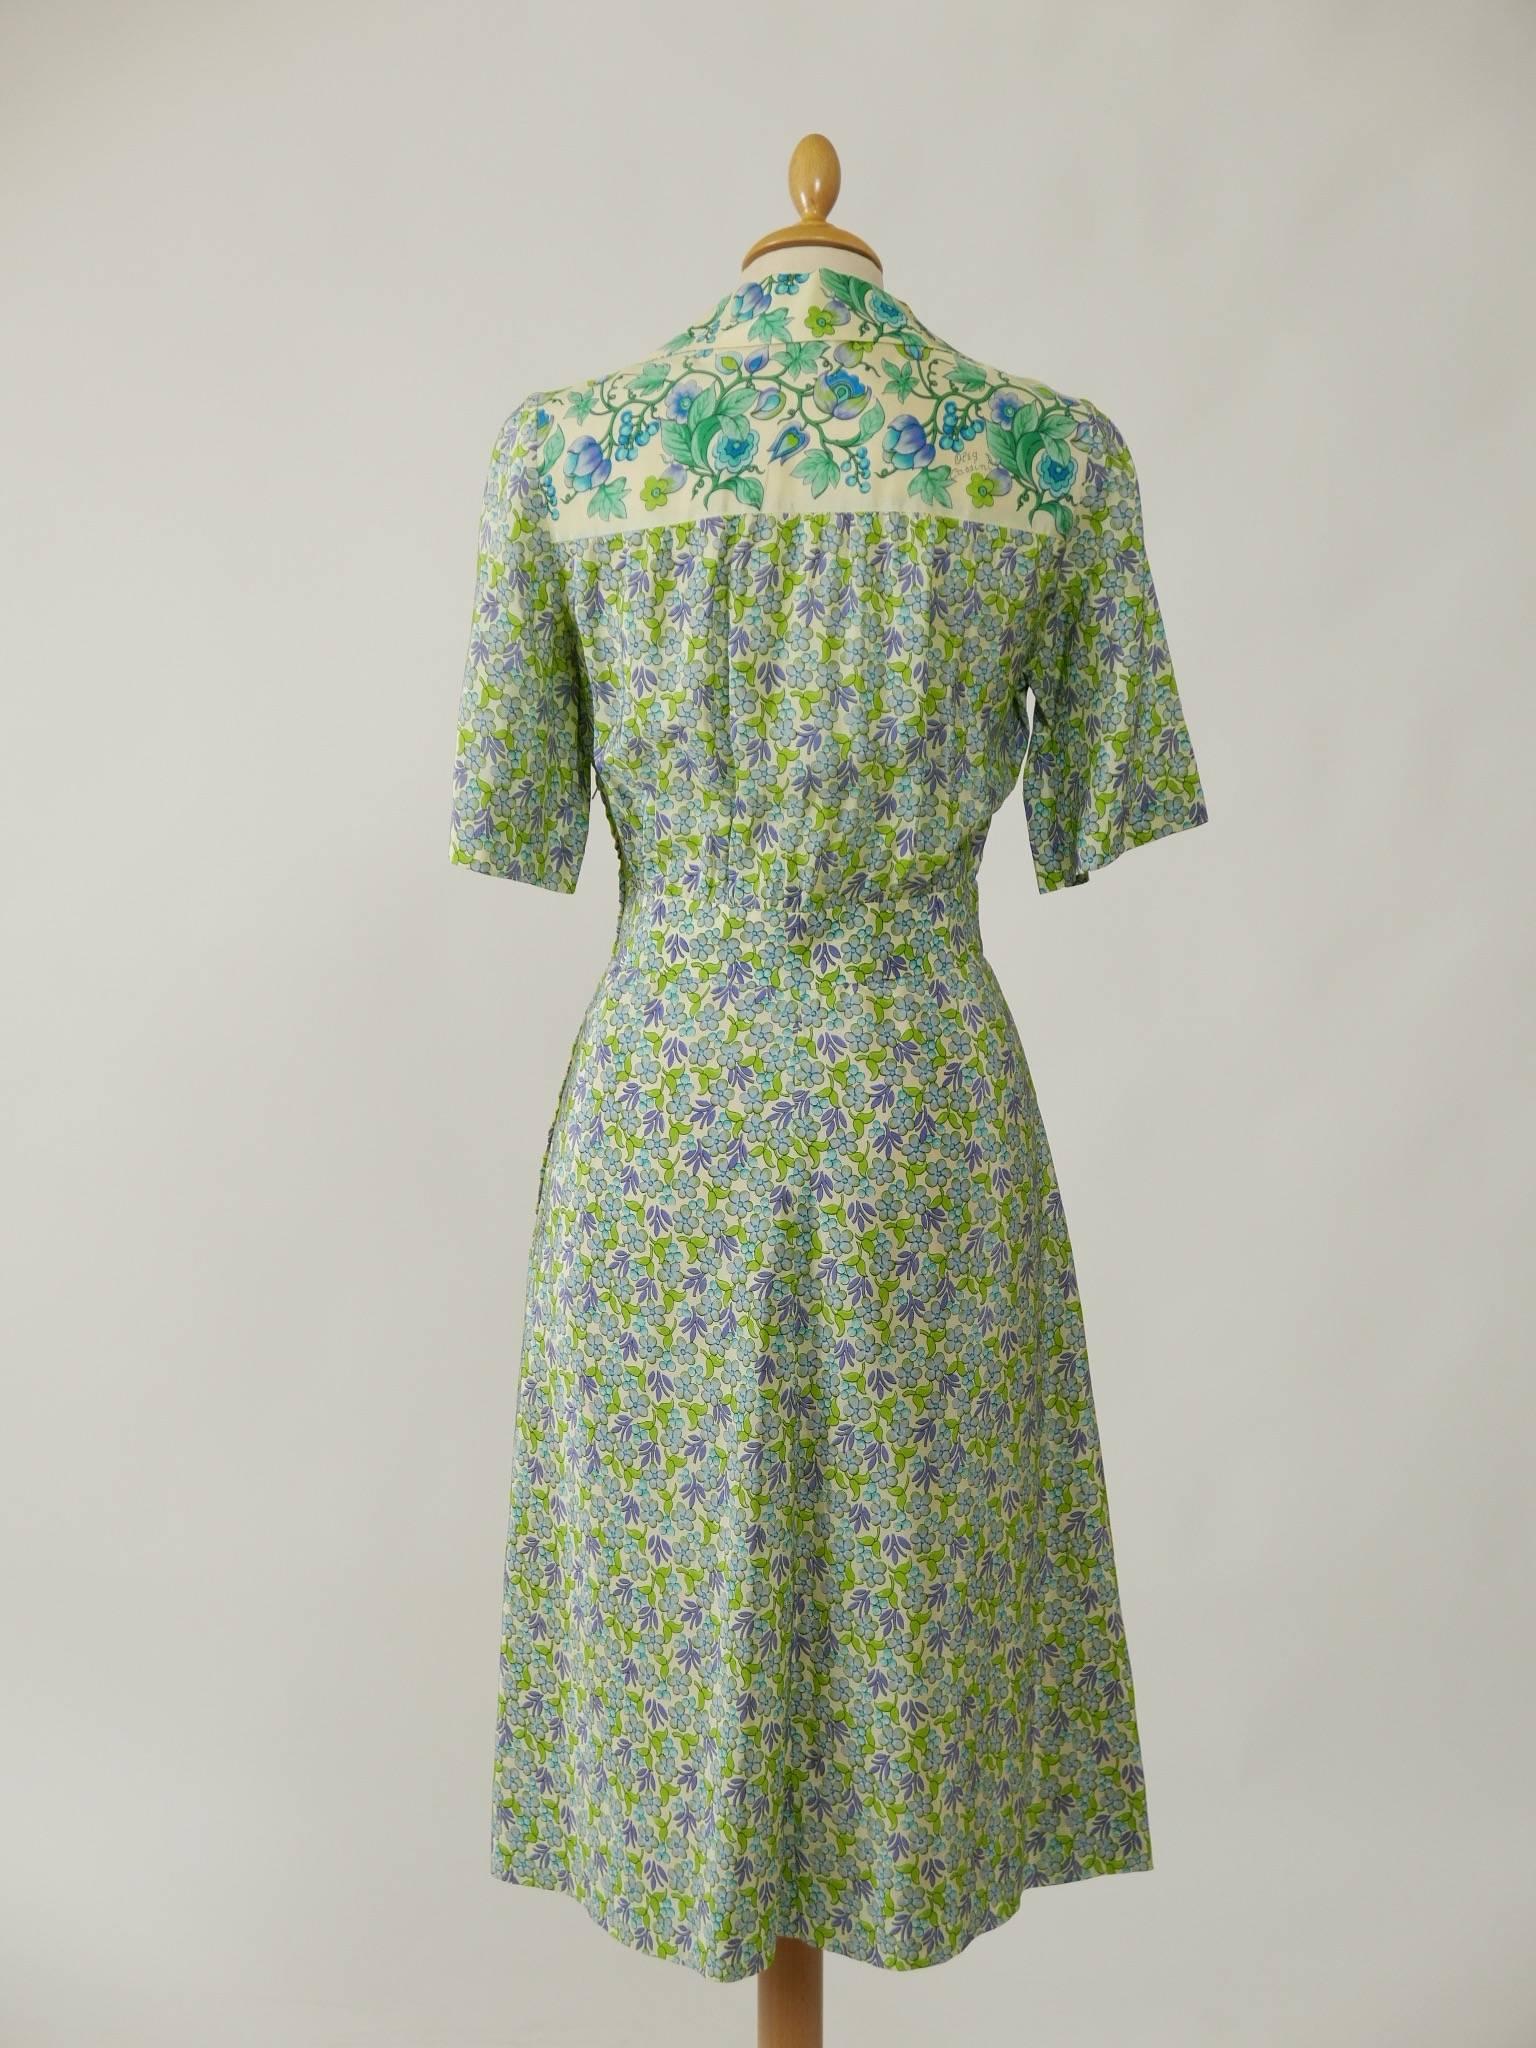 Gray 1970s OLEG CASSINI Green Floral Print Dress